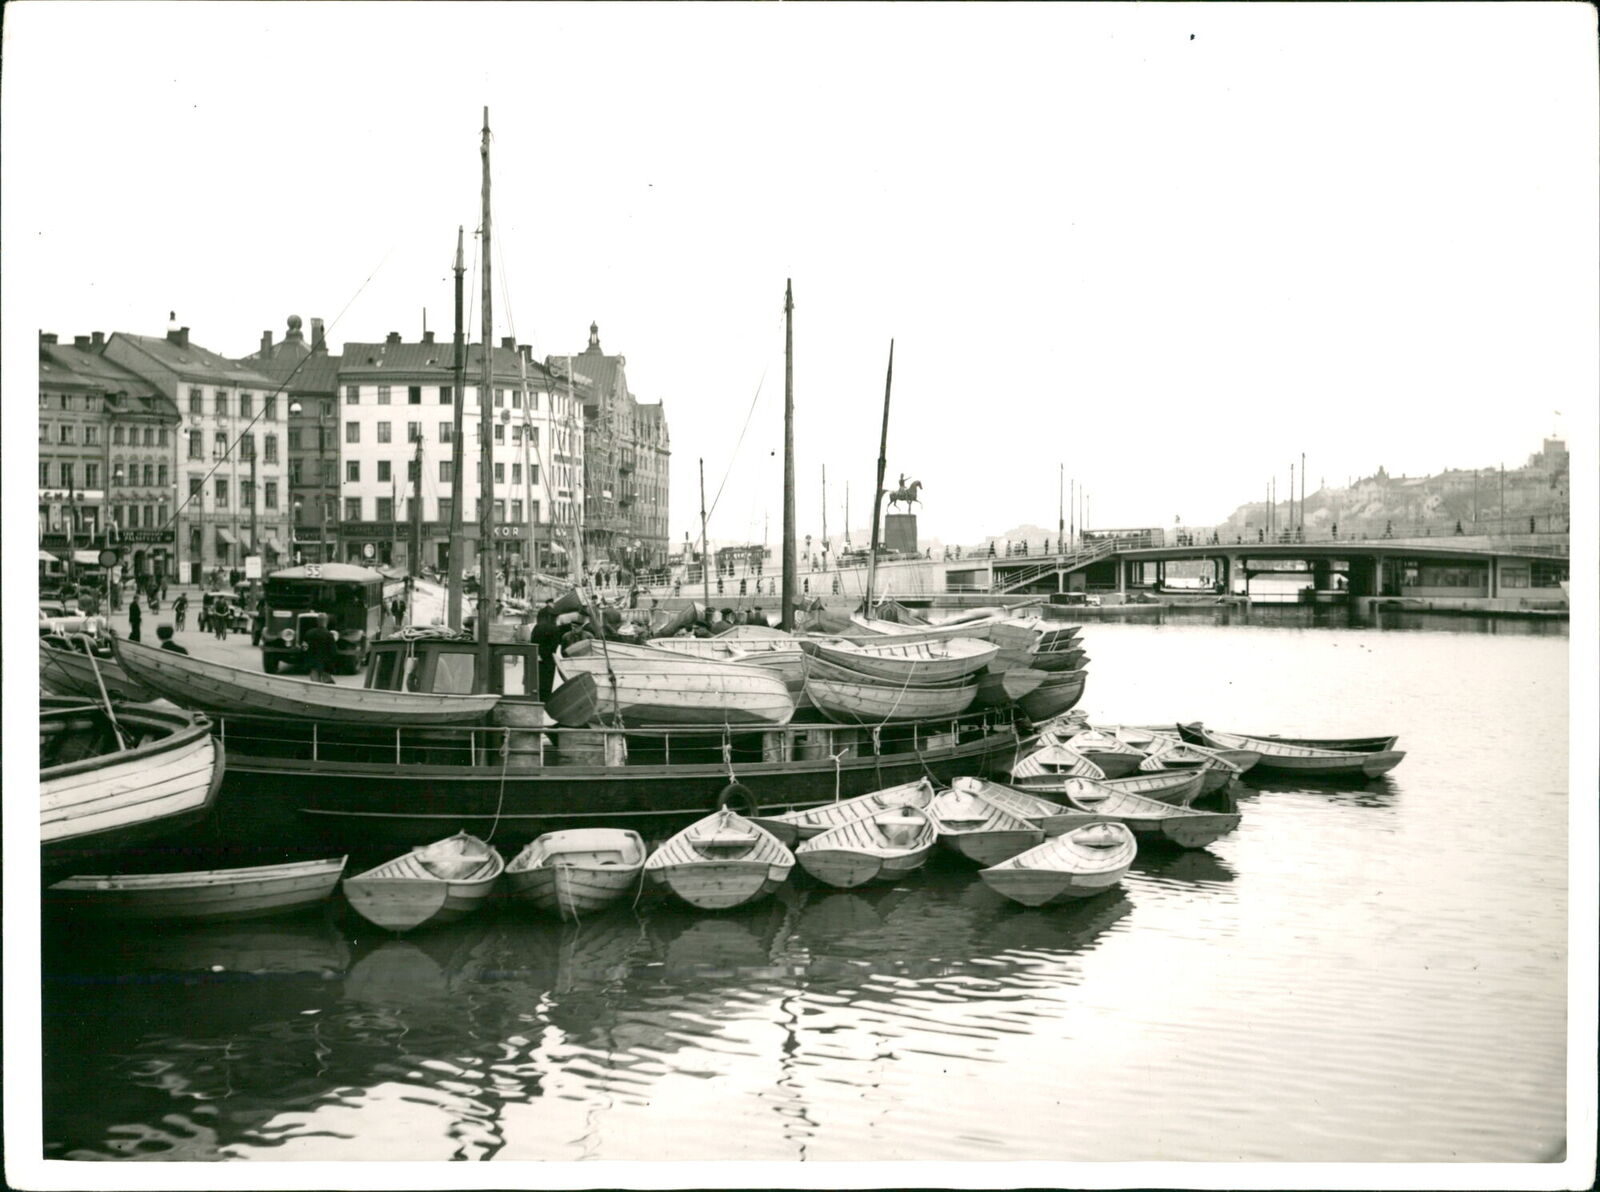 Boat traffic - Vintage Photograph 2368621